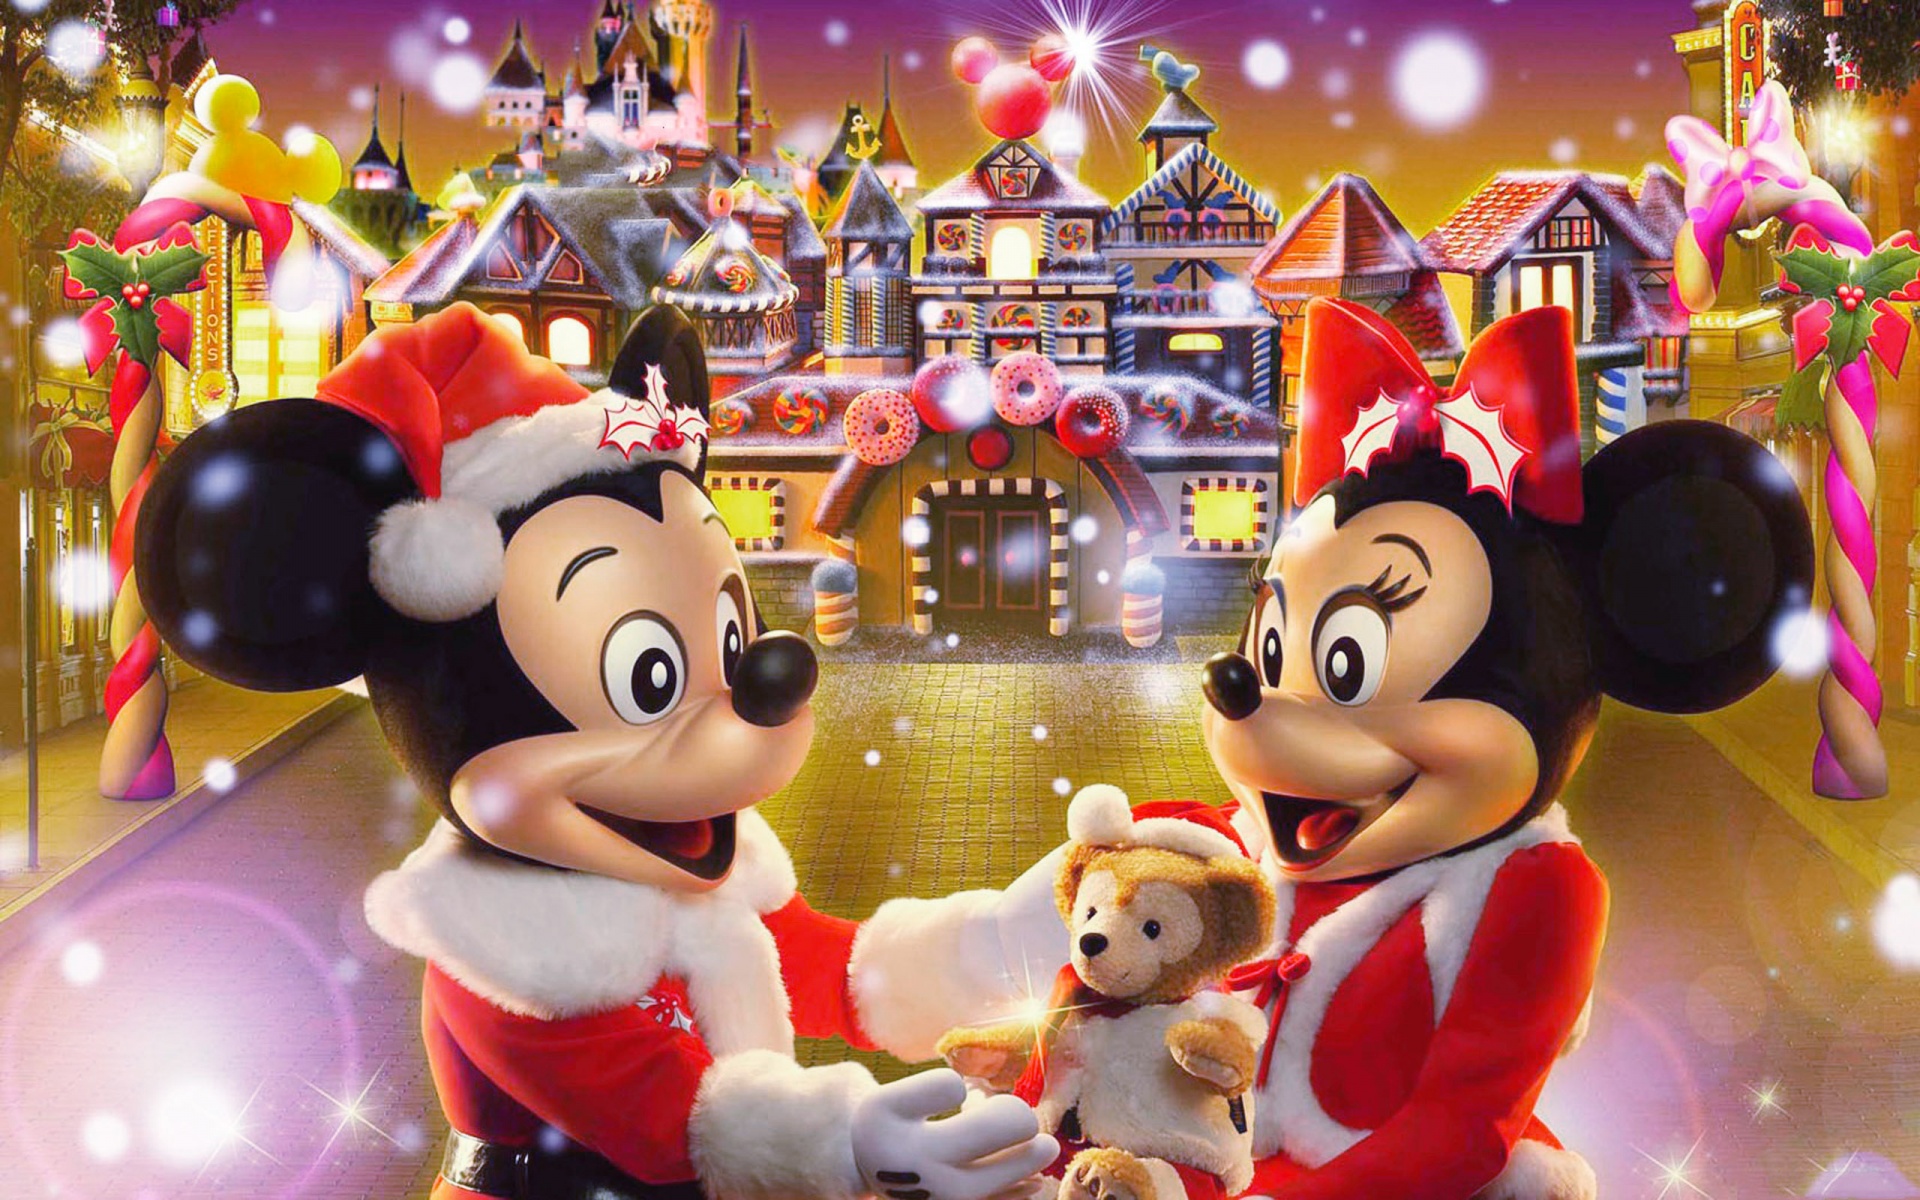 Disney Christmas Wallpaper HD